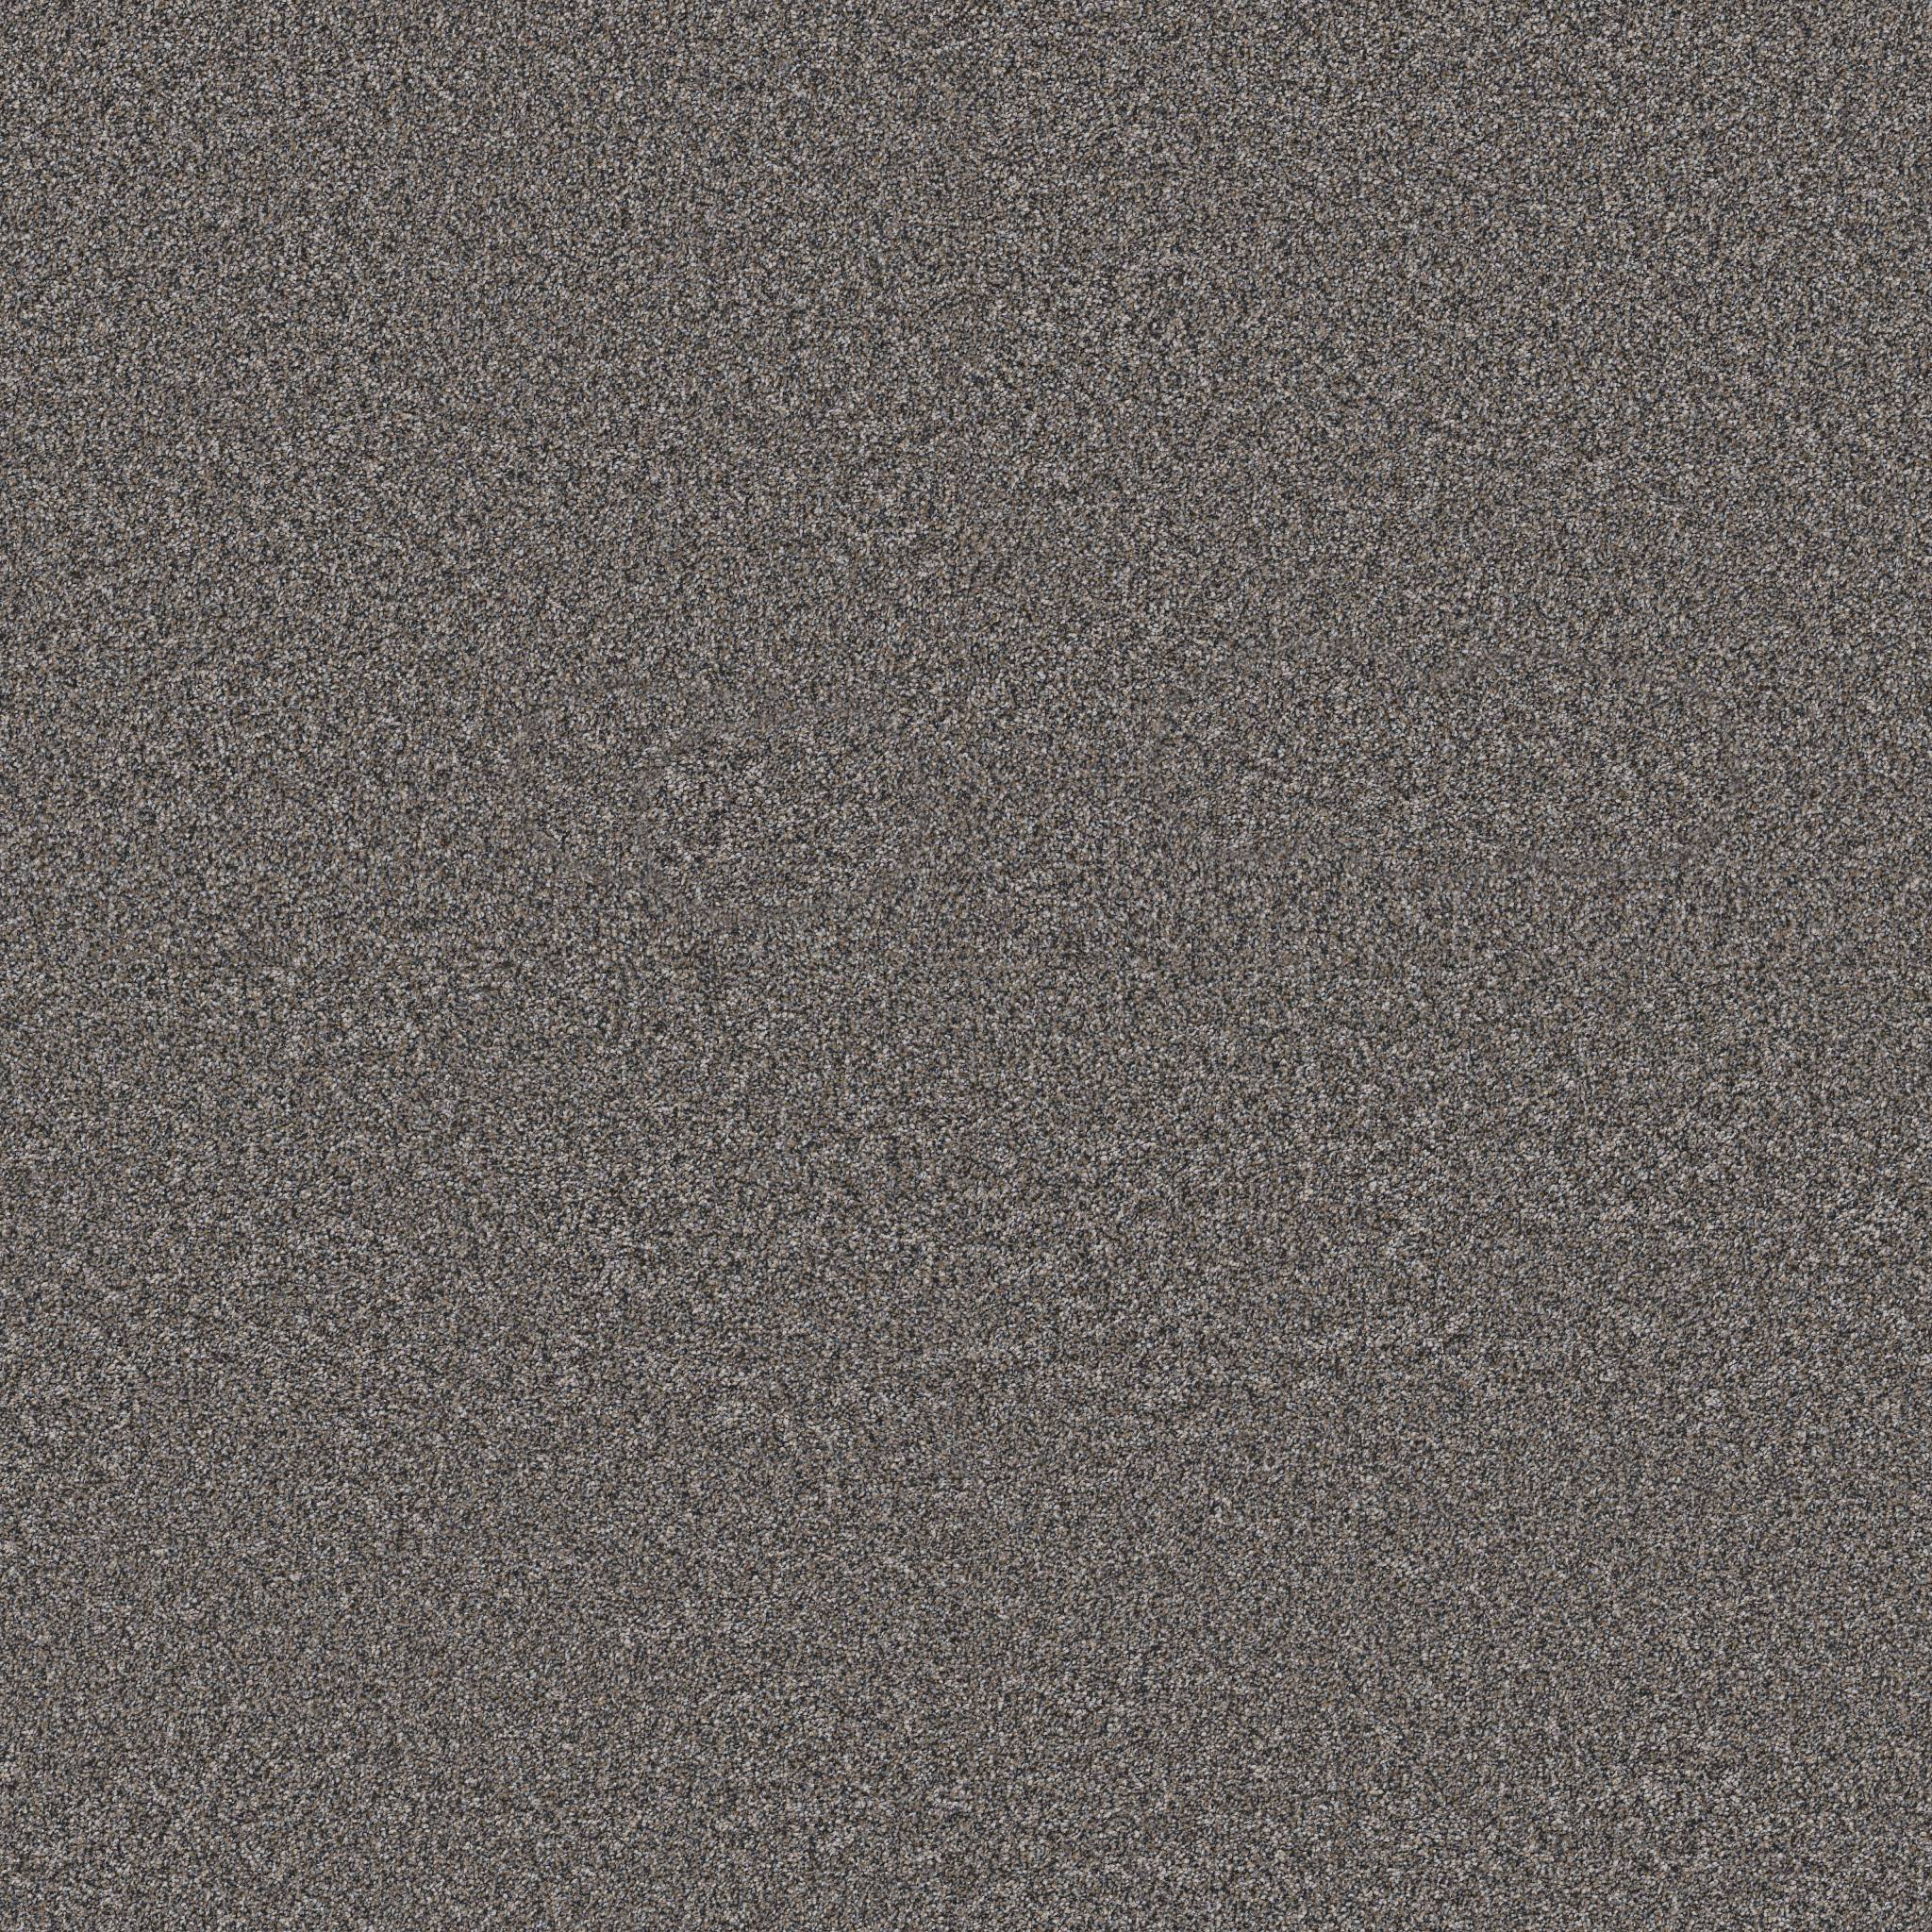 Kaleidoscope Carpet - Rustic Tan Zoomed Swatch Image